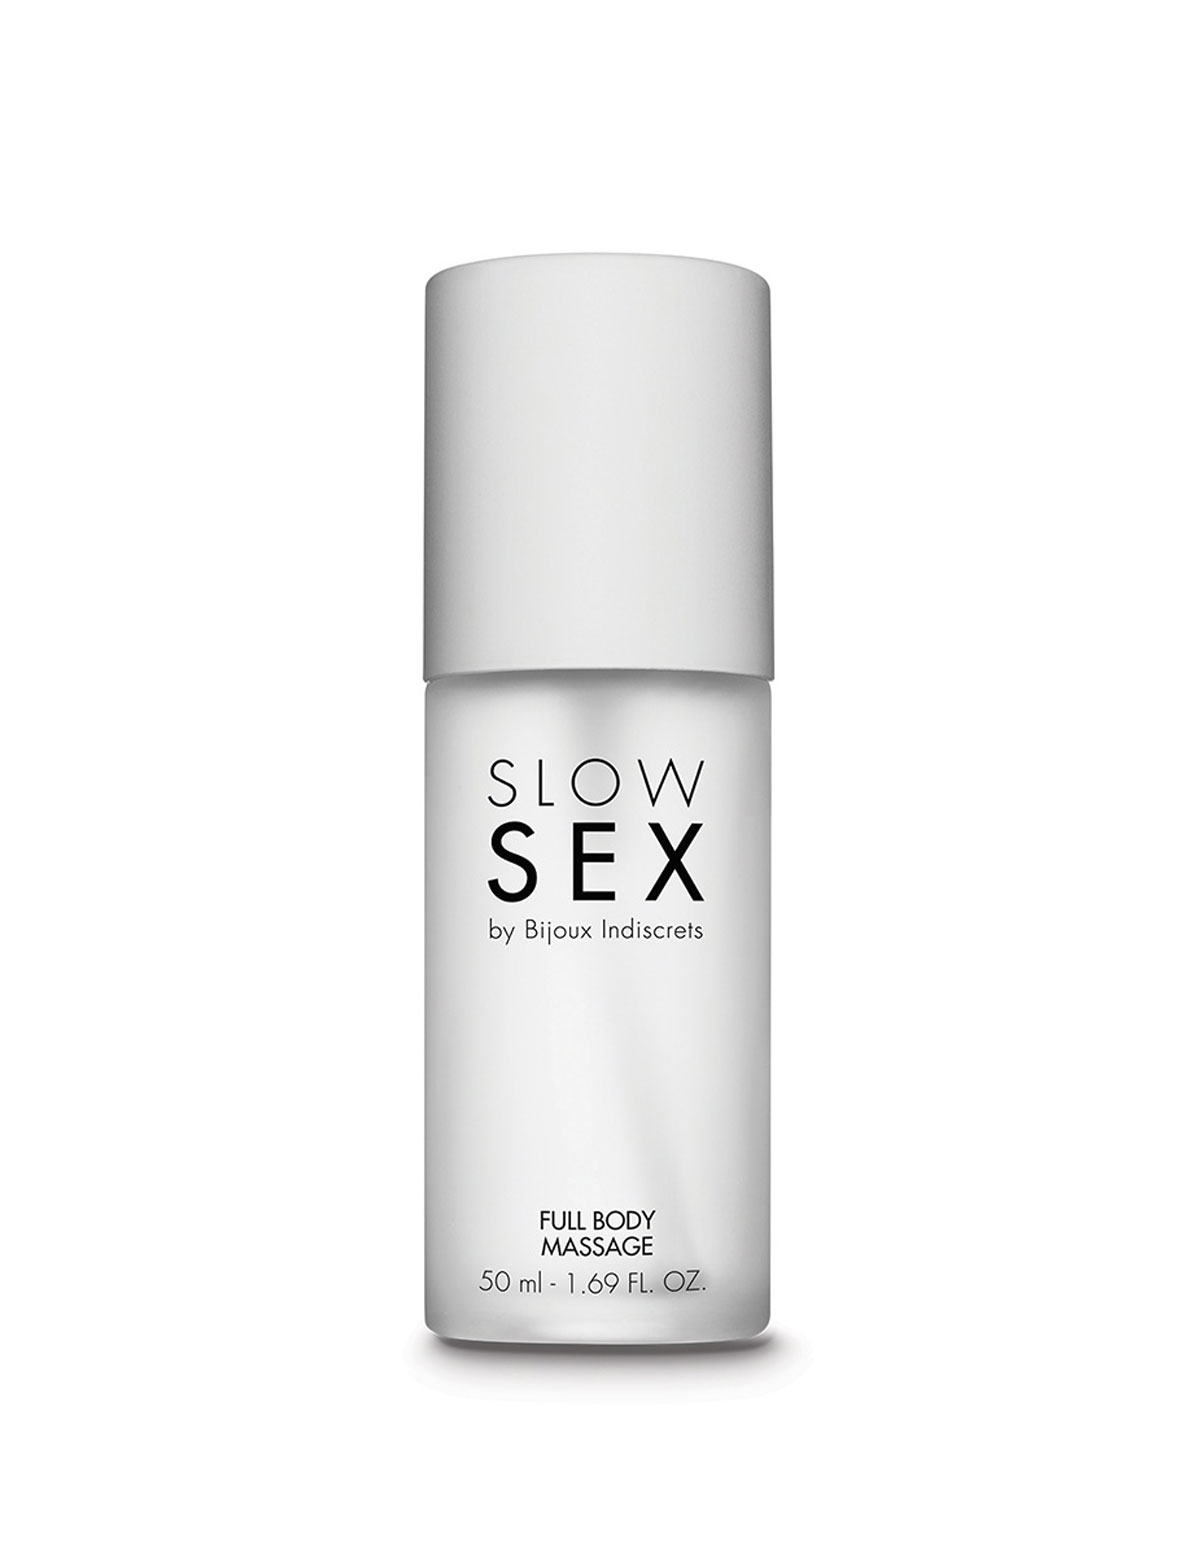 Slow sex massag.